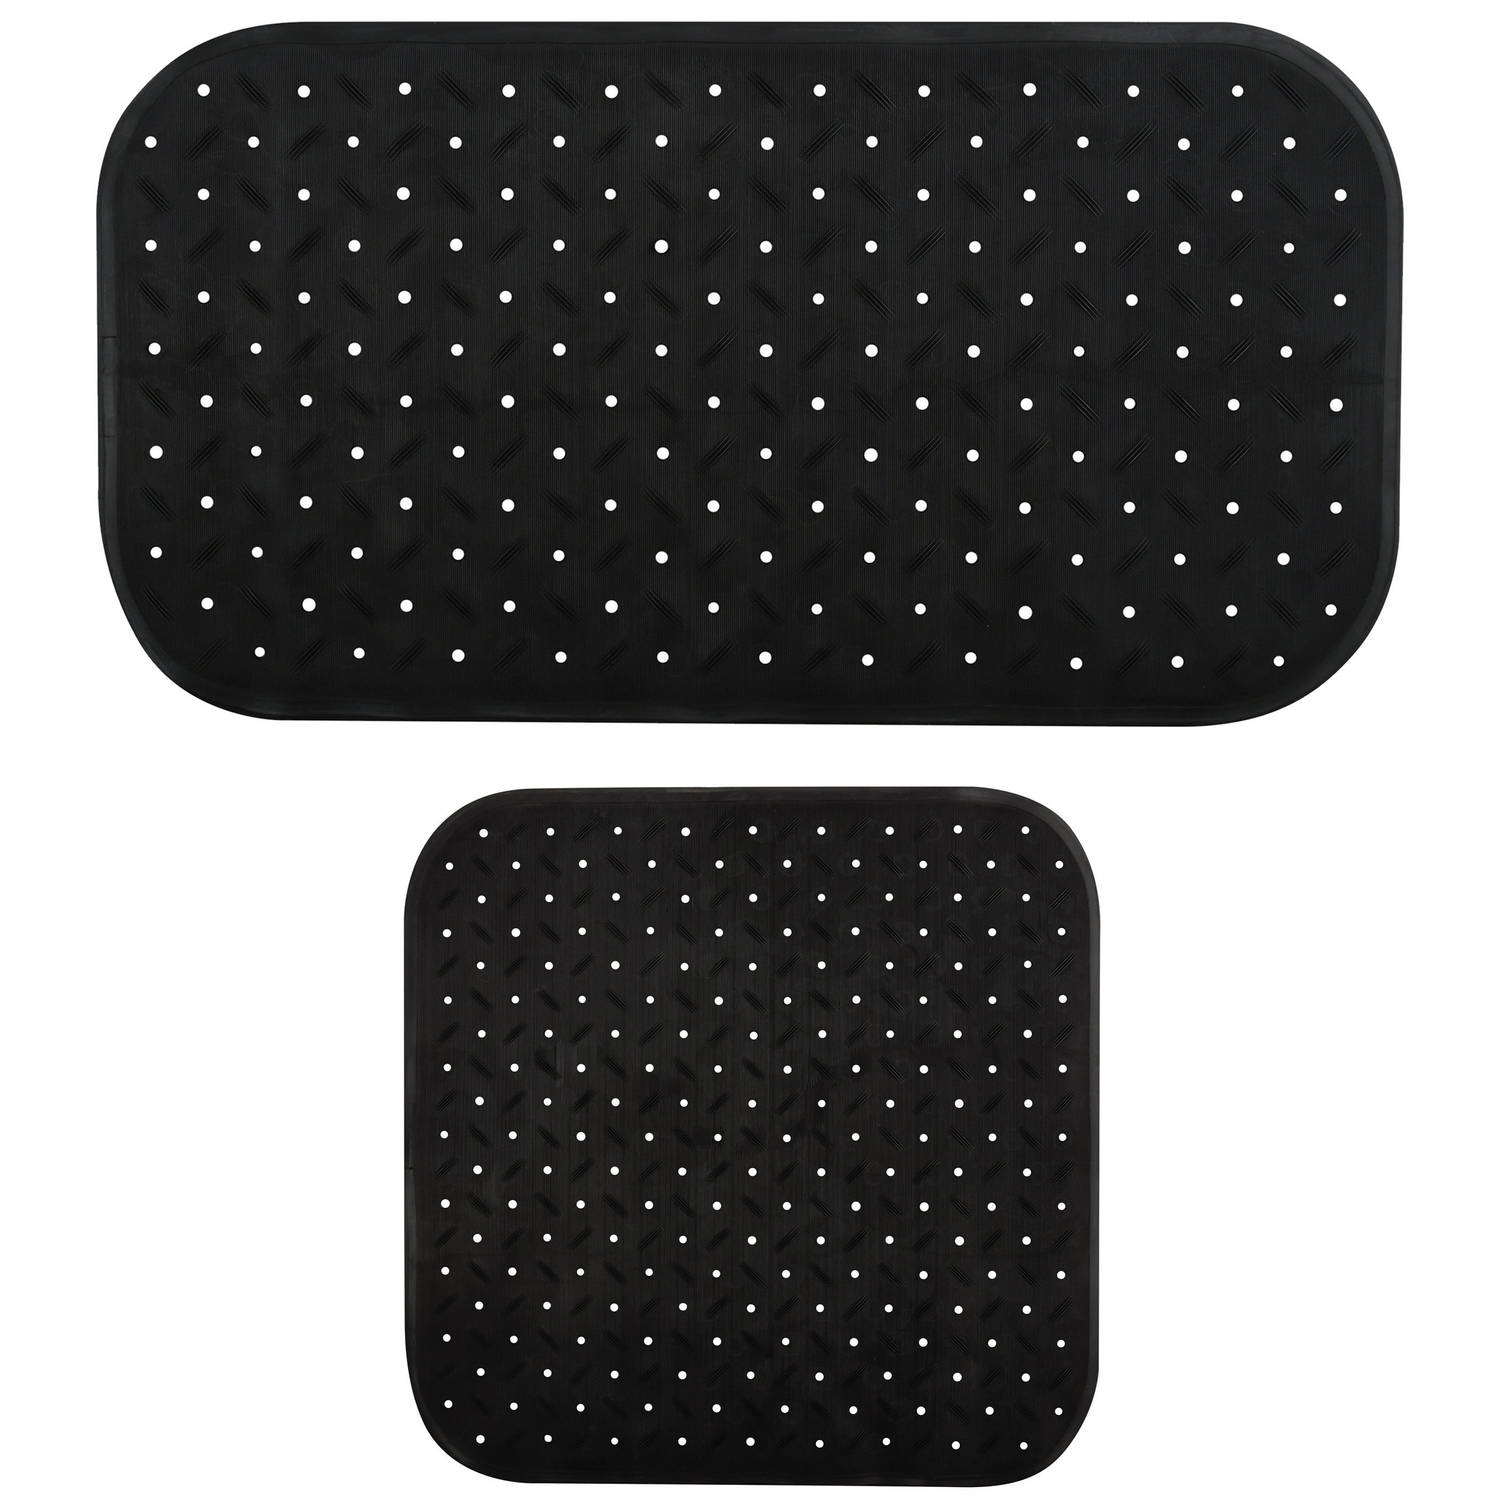 MSV Douche-bad anti-slip matten set badkamer rubber 2x stuks zwart 2 formaten Badmatjes